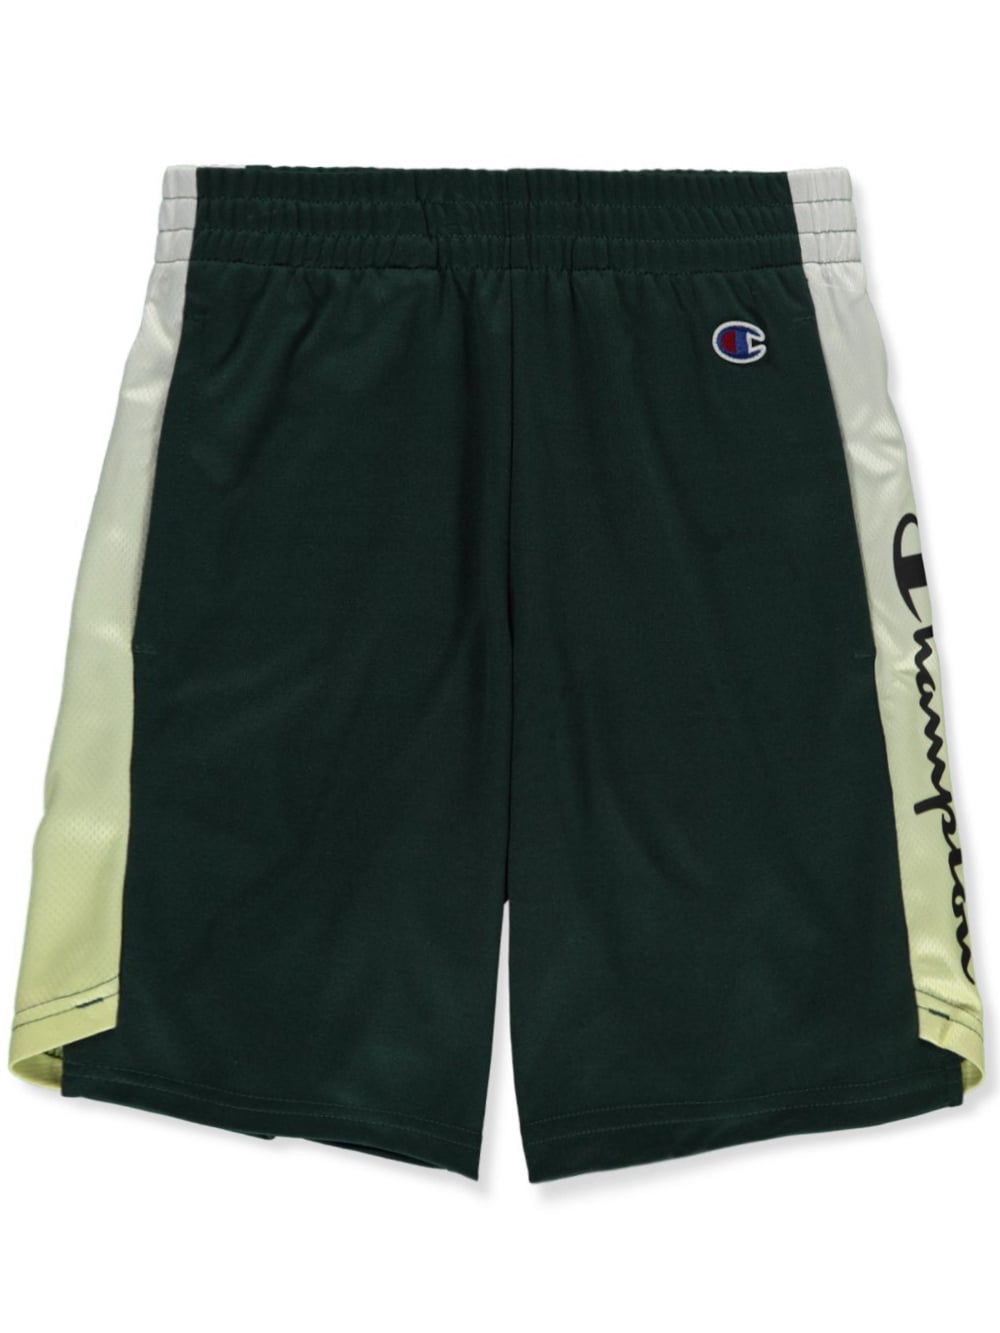 Champion Boys' Basketball Shorts - dark green, 10 - 12 (Big Boys ...